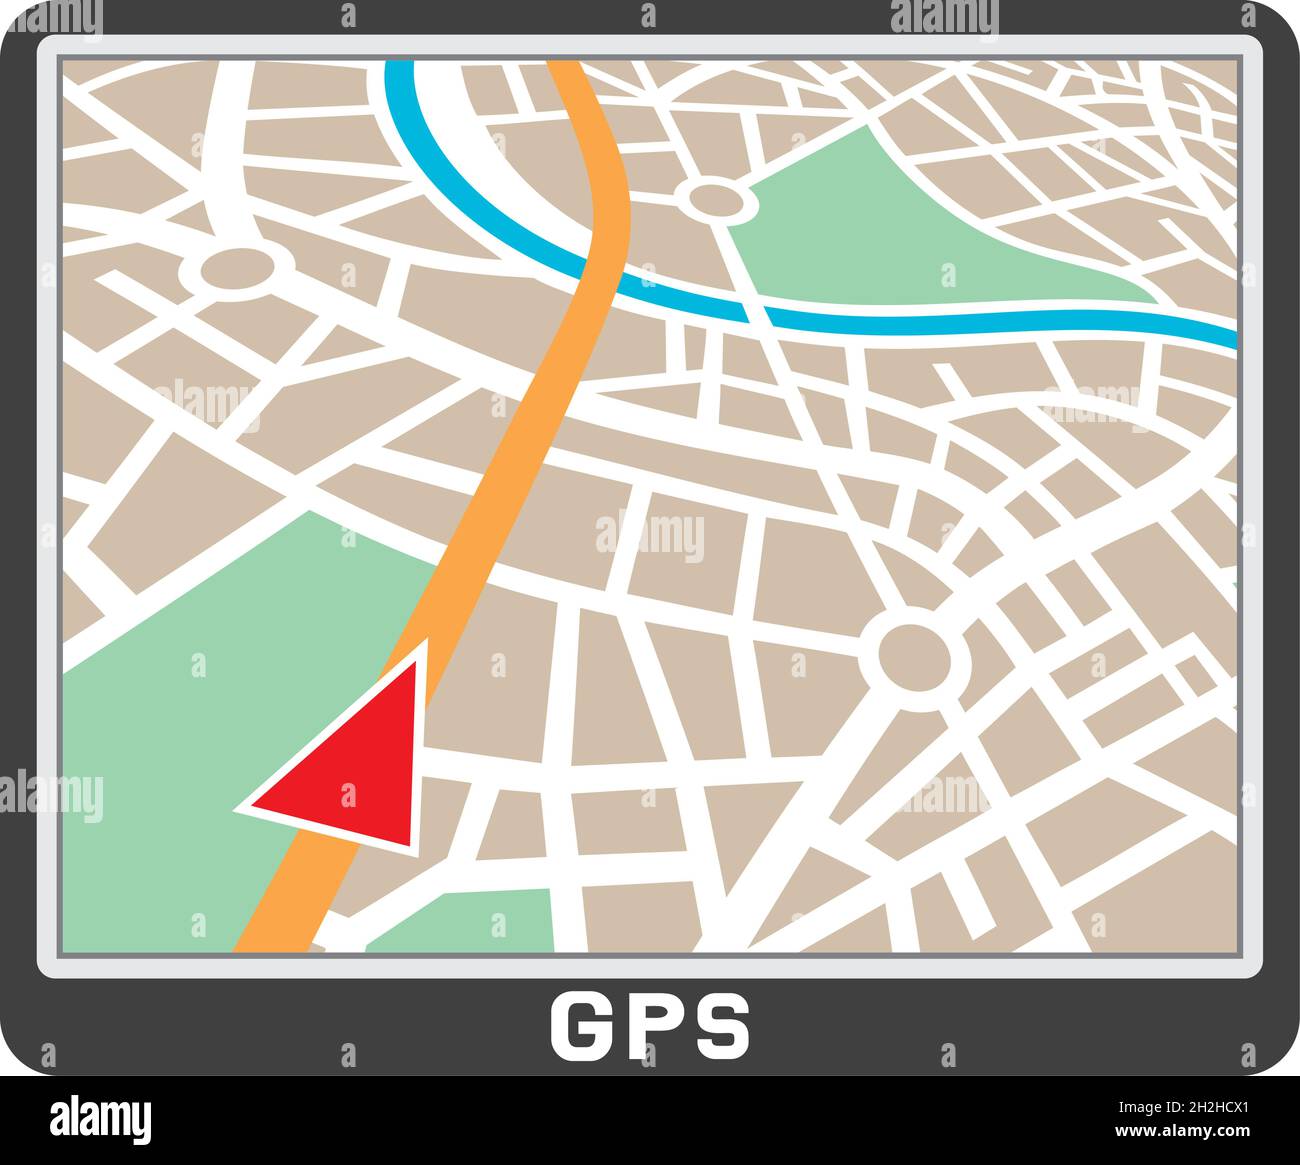 GPS navigation display vector illustration Stock Vector